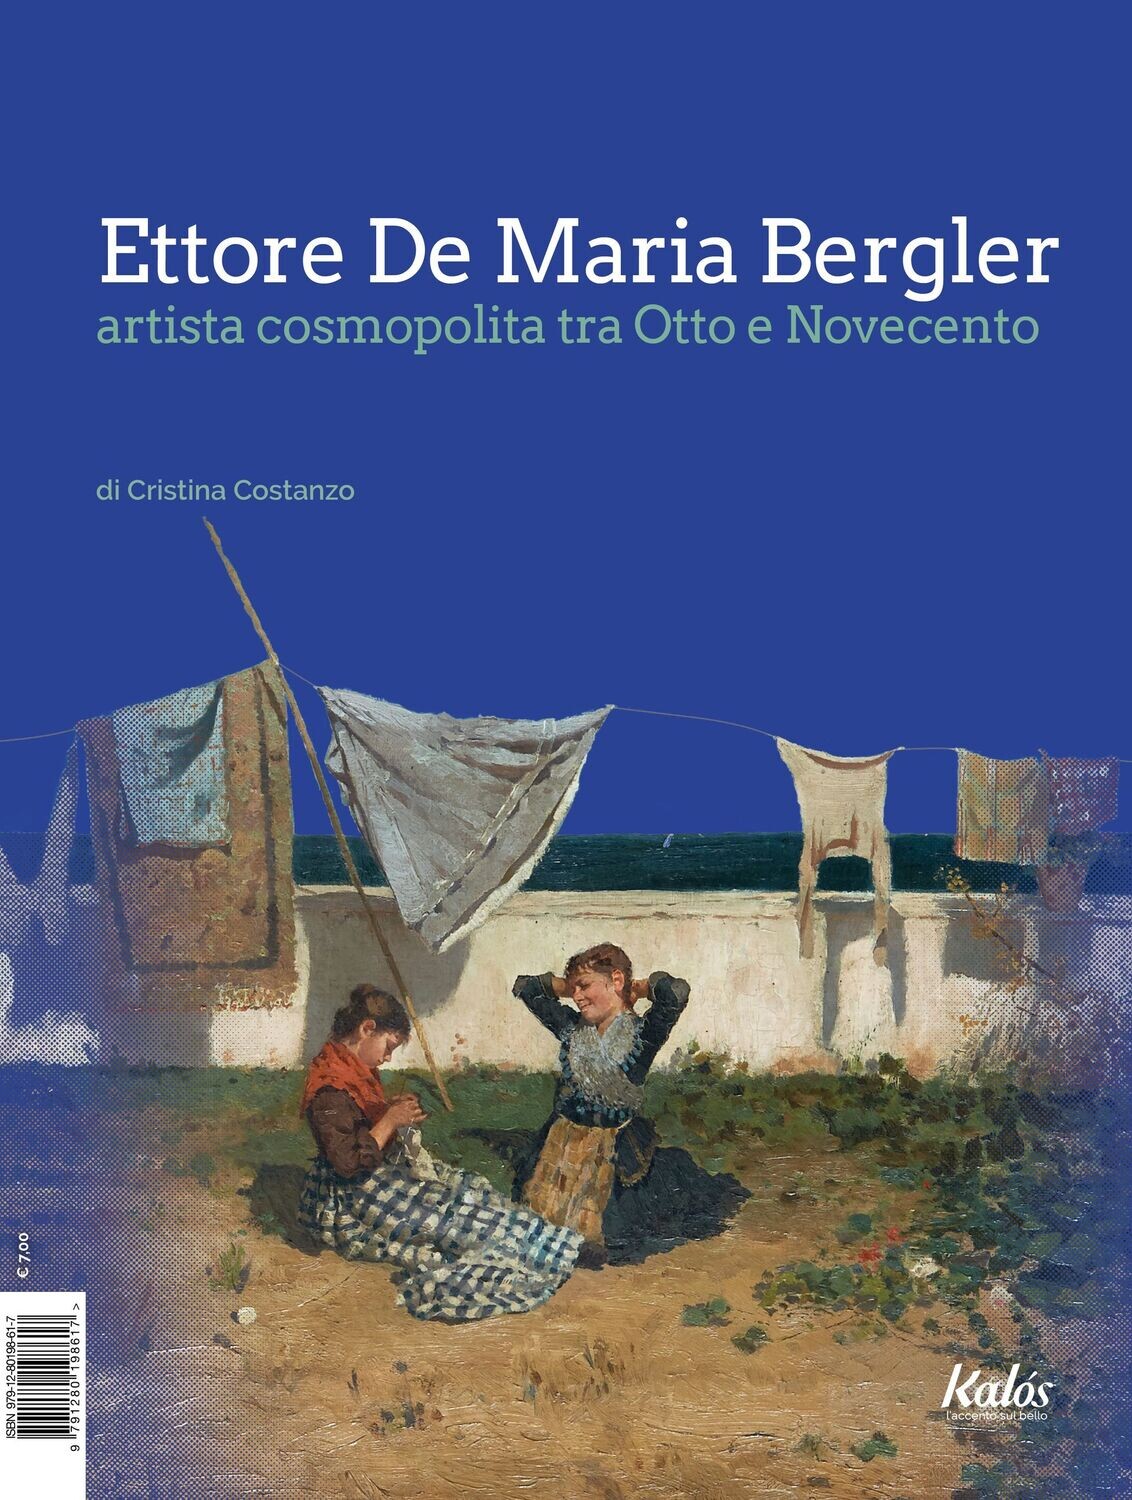 Ettore De Maria Bergler